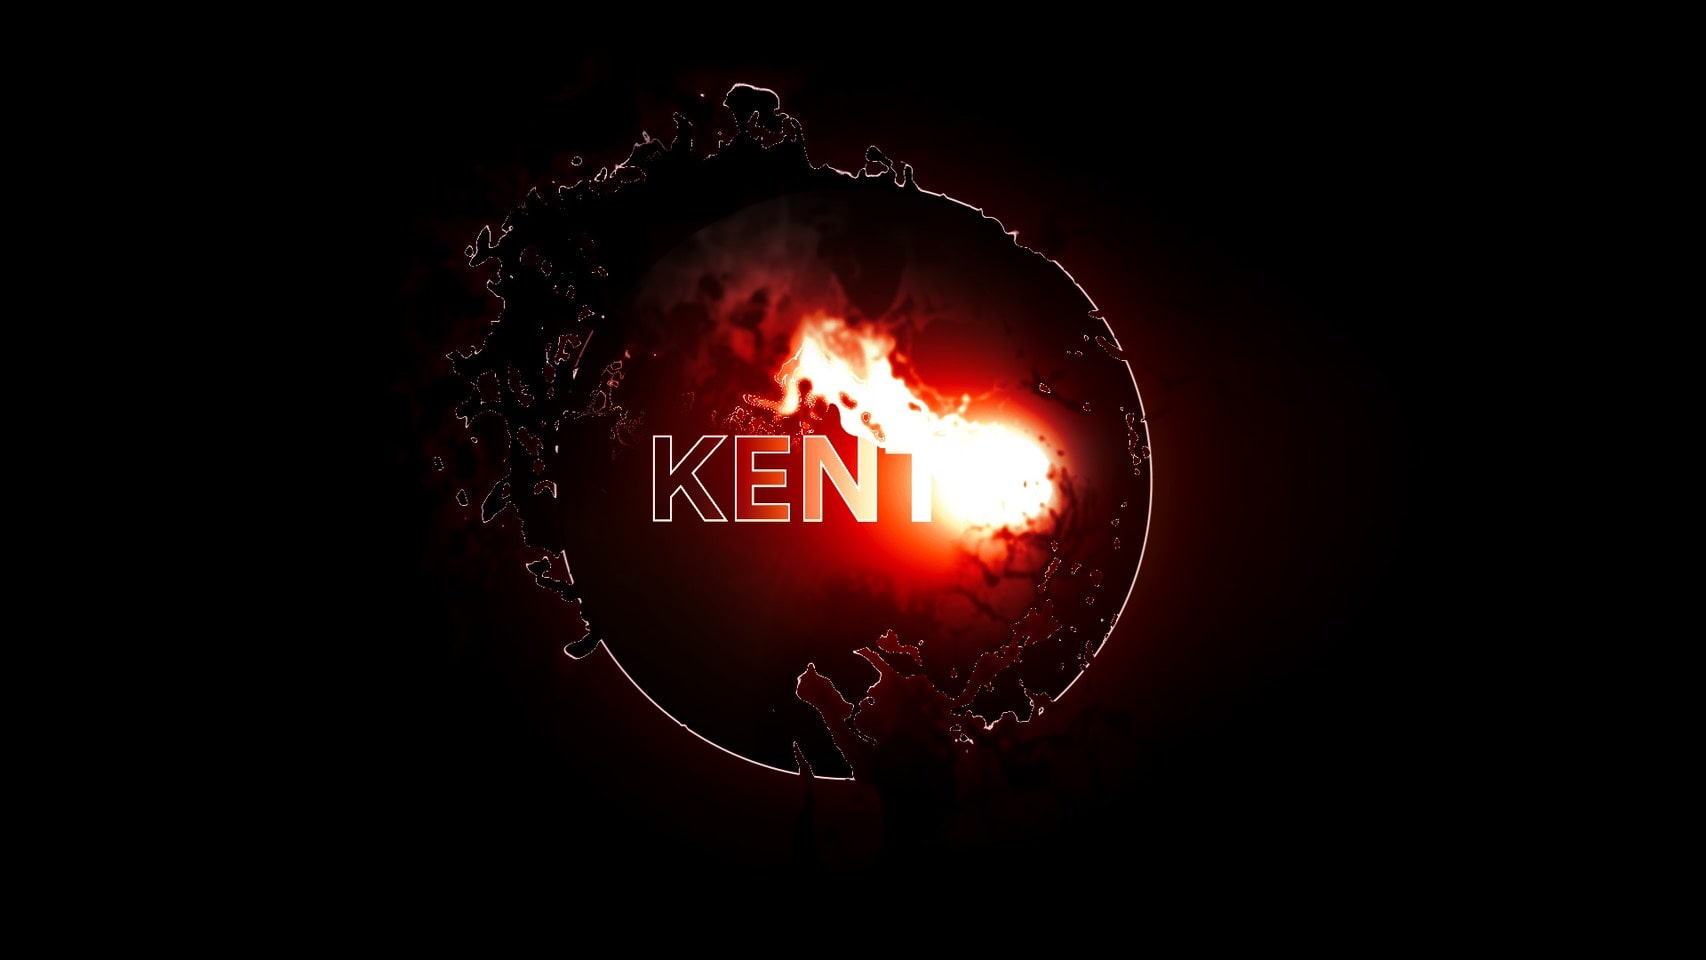 KENTO AR project - FIRE